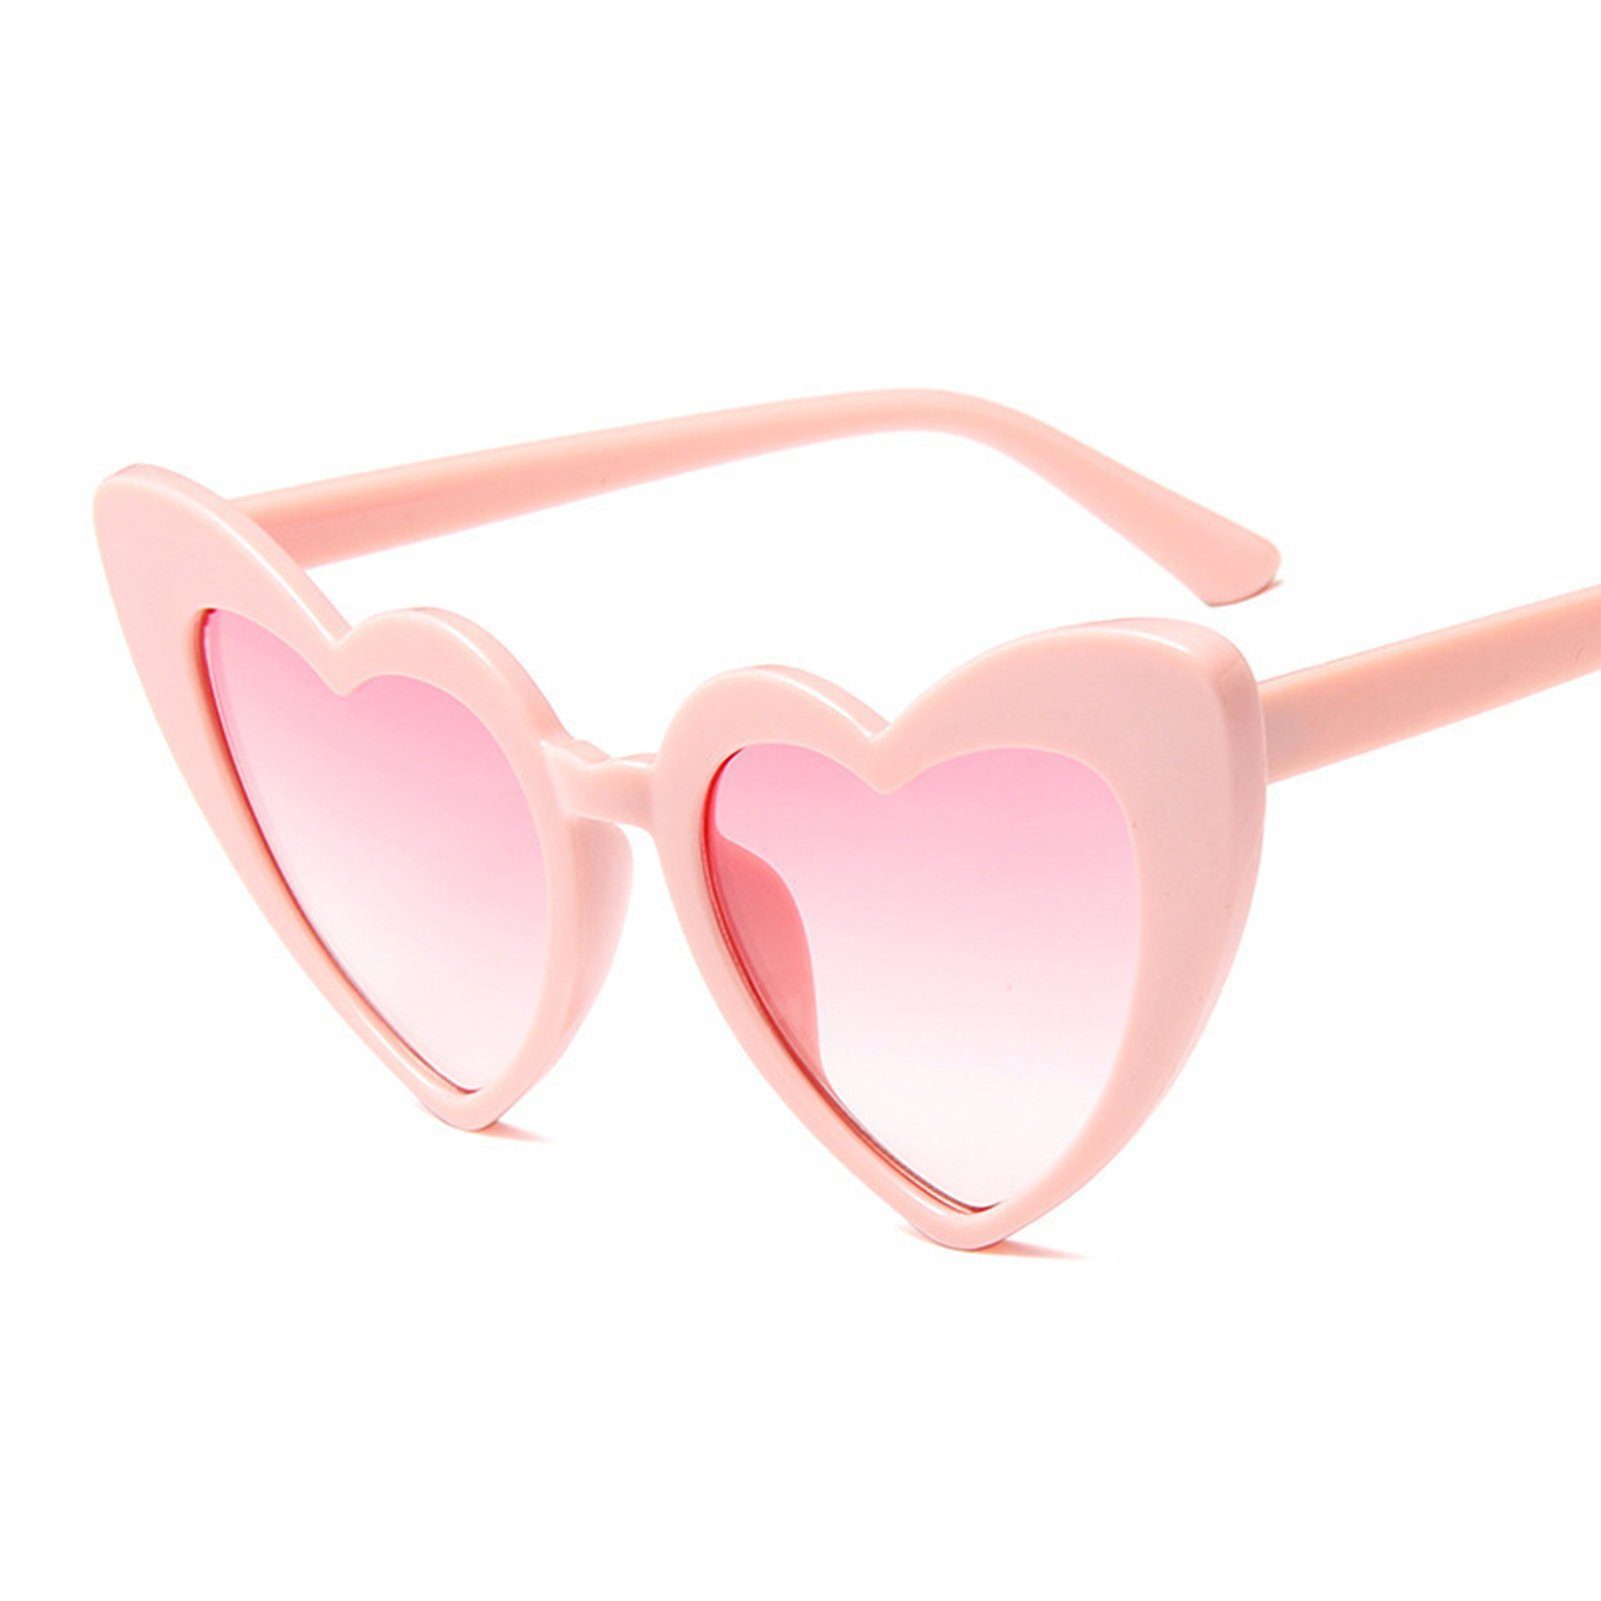 Herzform, pink a Retrosonnenbrille Vintage-Stil, Damen-Sonnenbrille Blusmart In Blendfrei